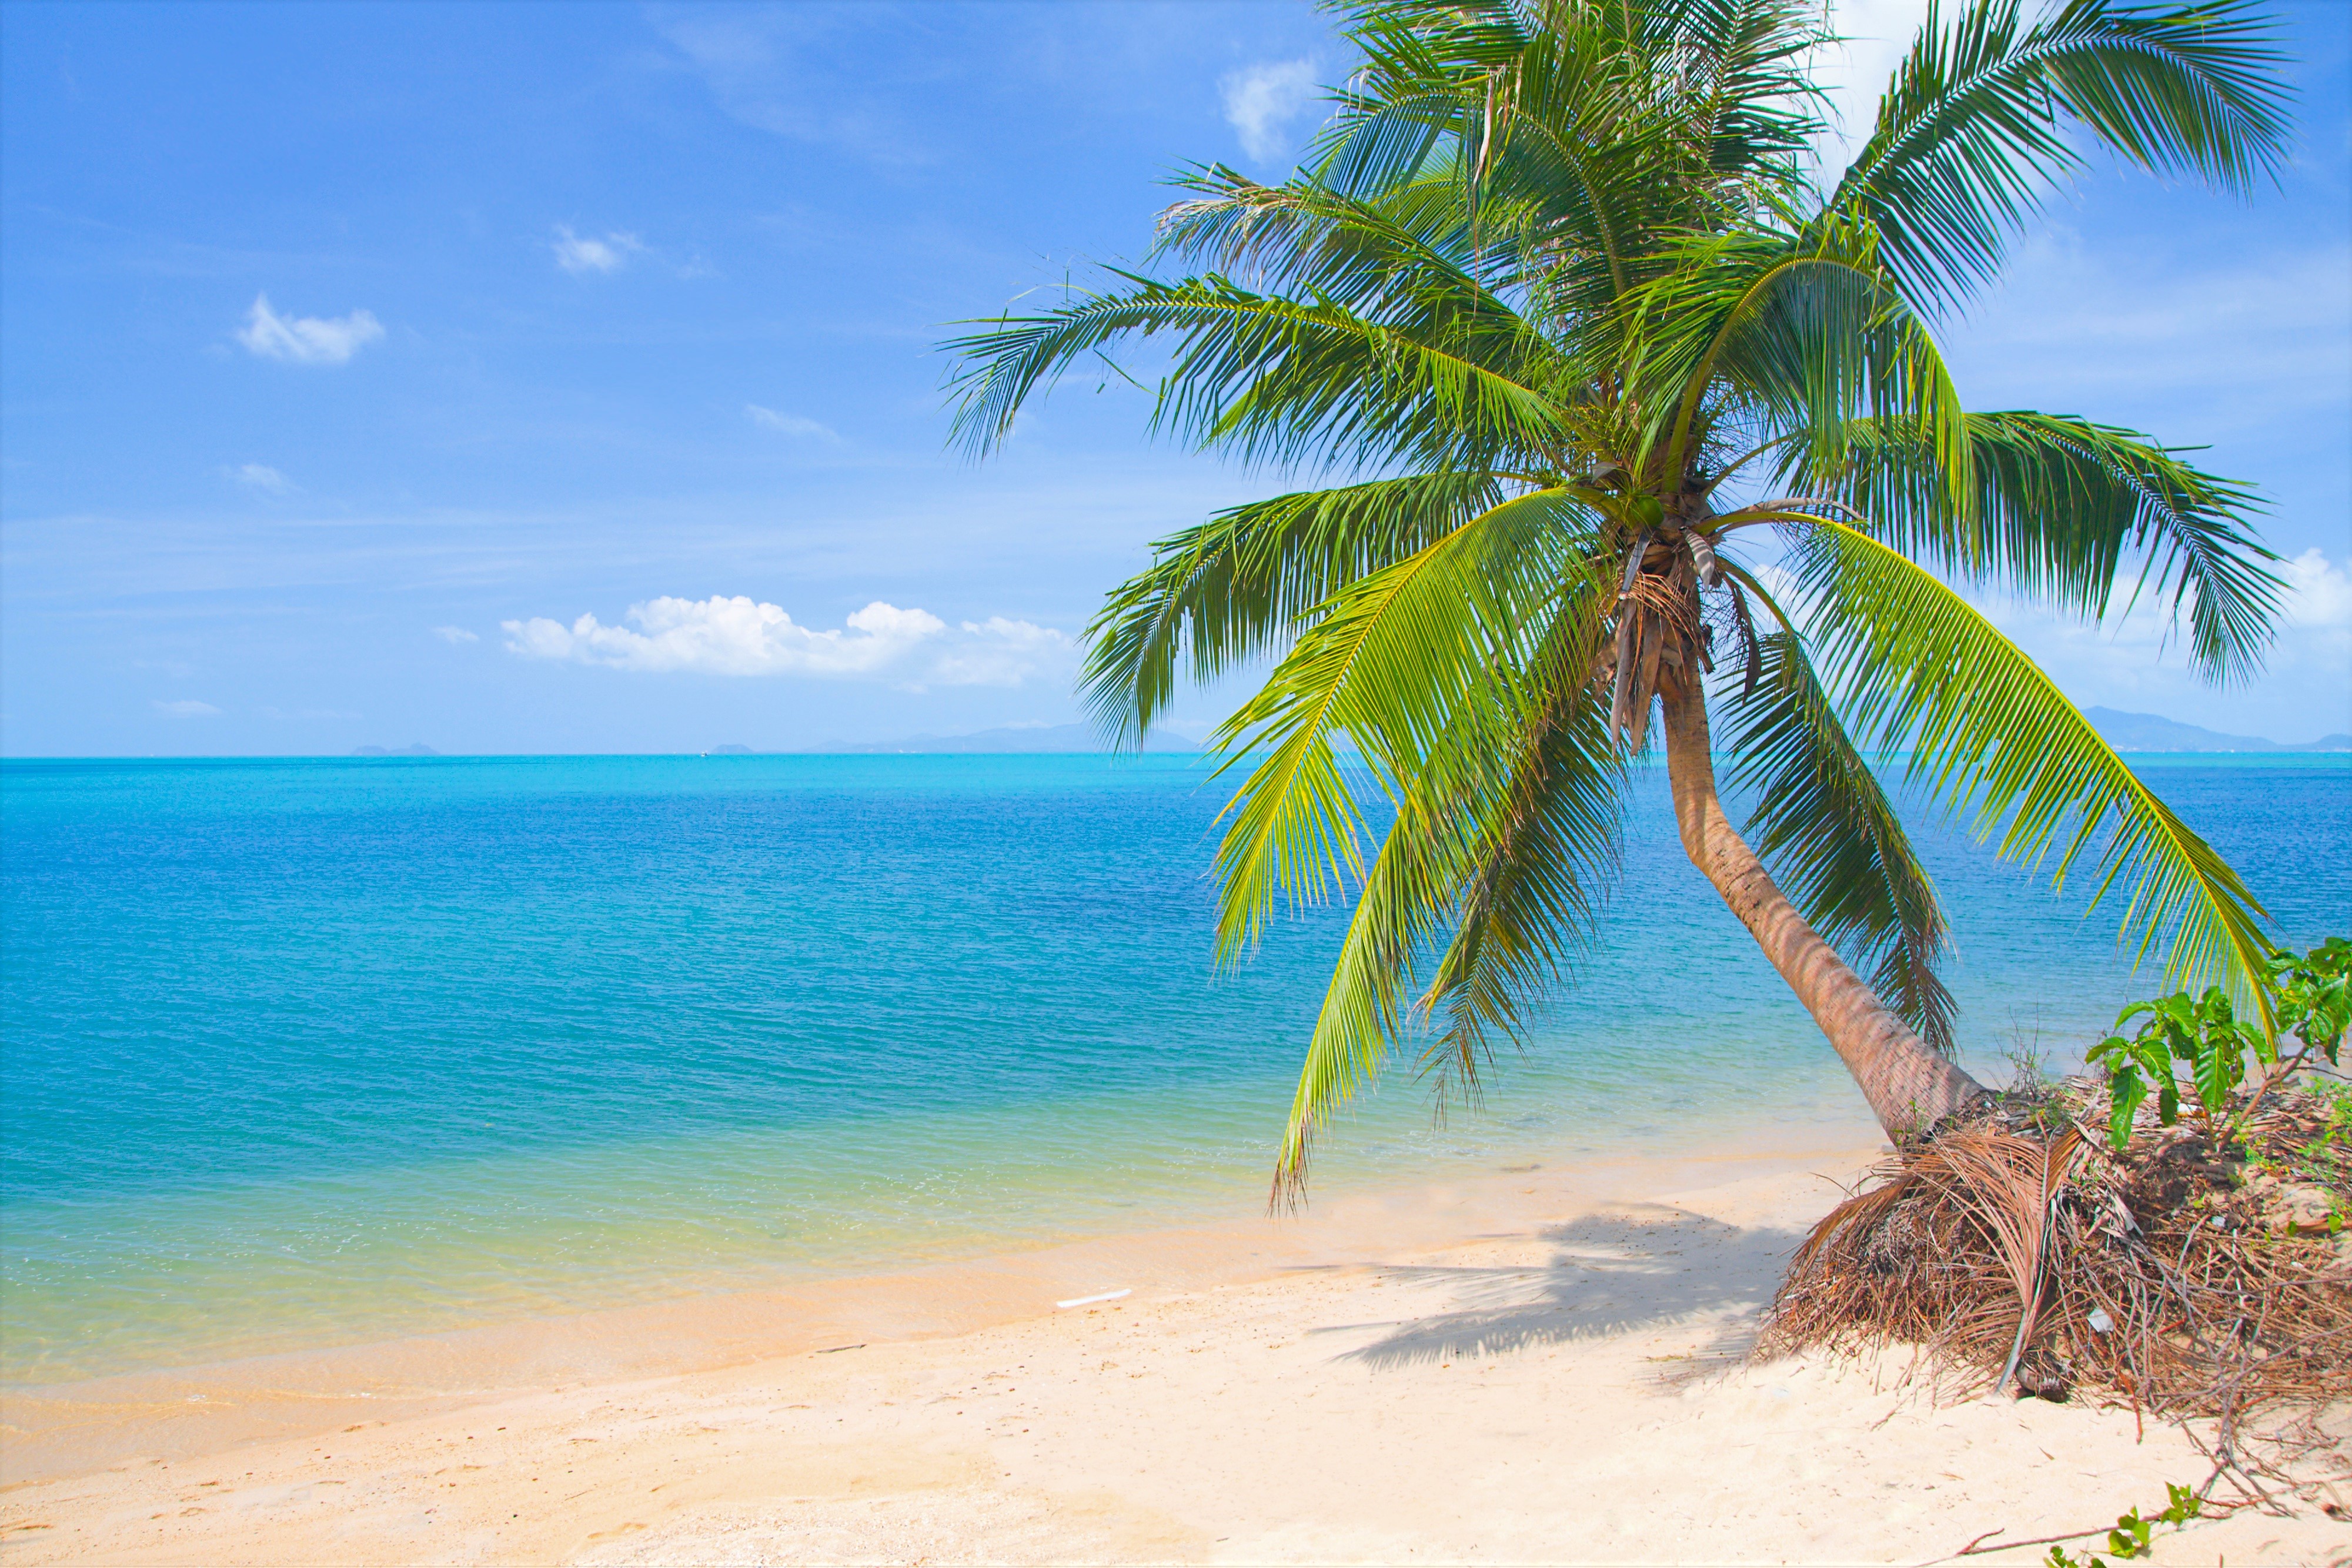 Beach tree. Море пляж. Тропический пляж. Море пляж пальмы. Пляж с пальмами.